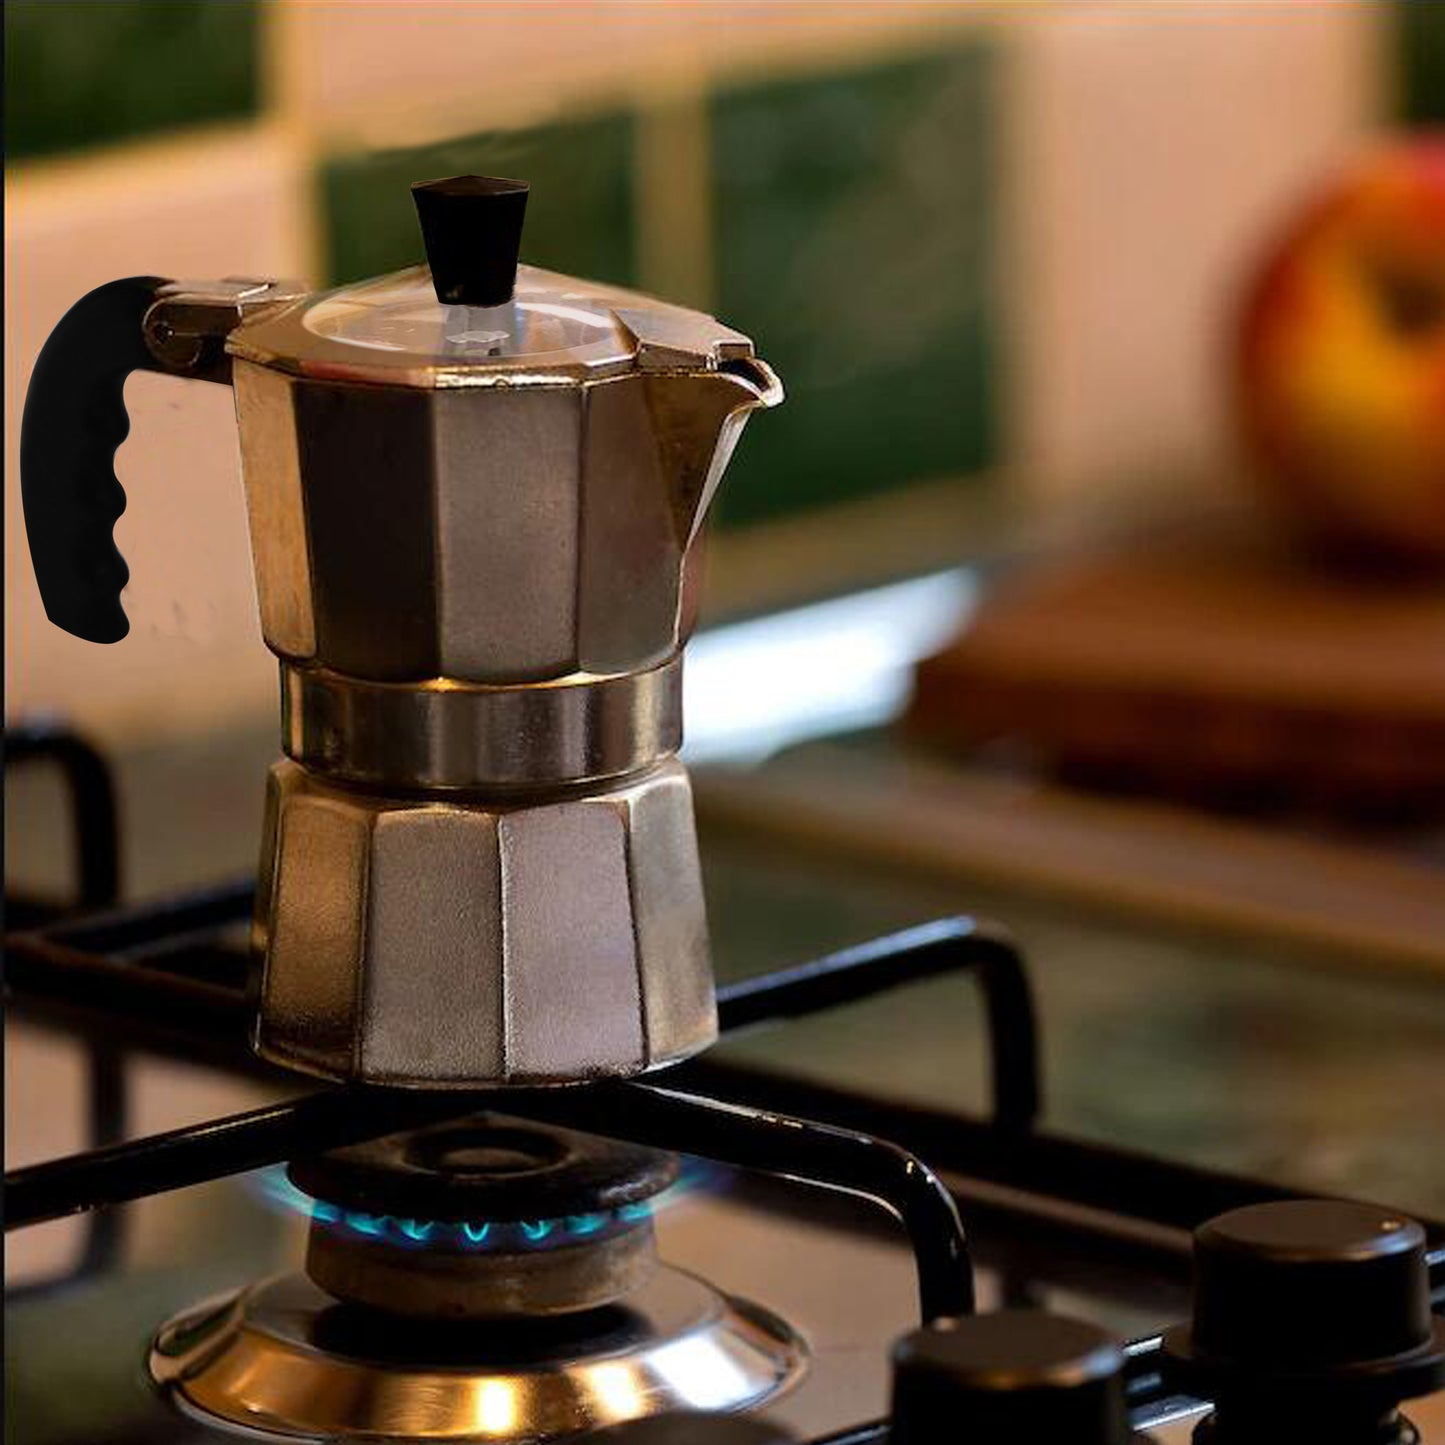 Bene Casa Aluminum 6-Cup Espresso Maker with See Through Lid, Authentic Espresso Maker, - 6 Cup